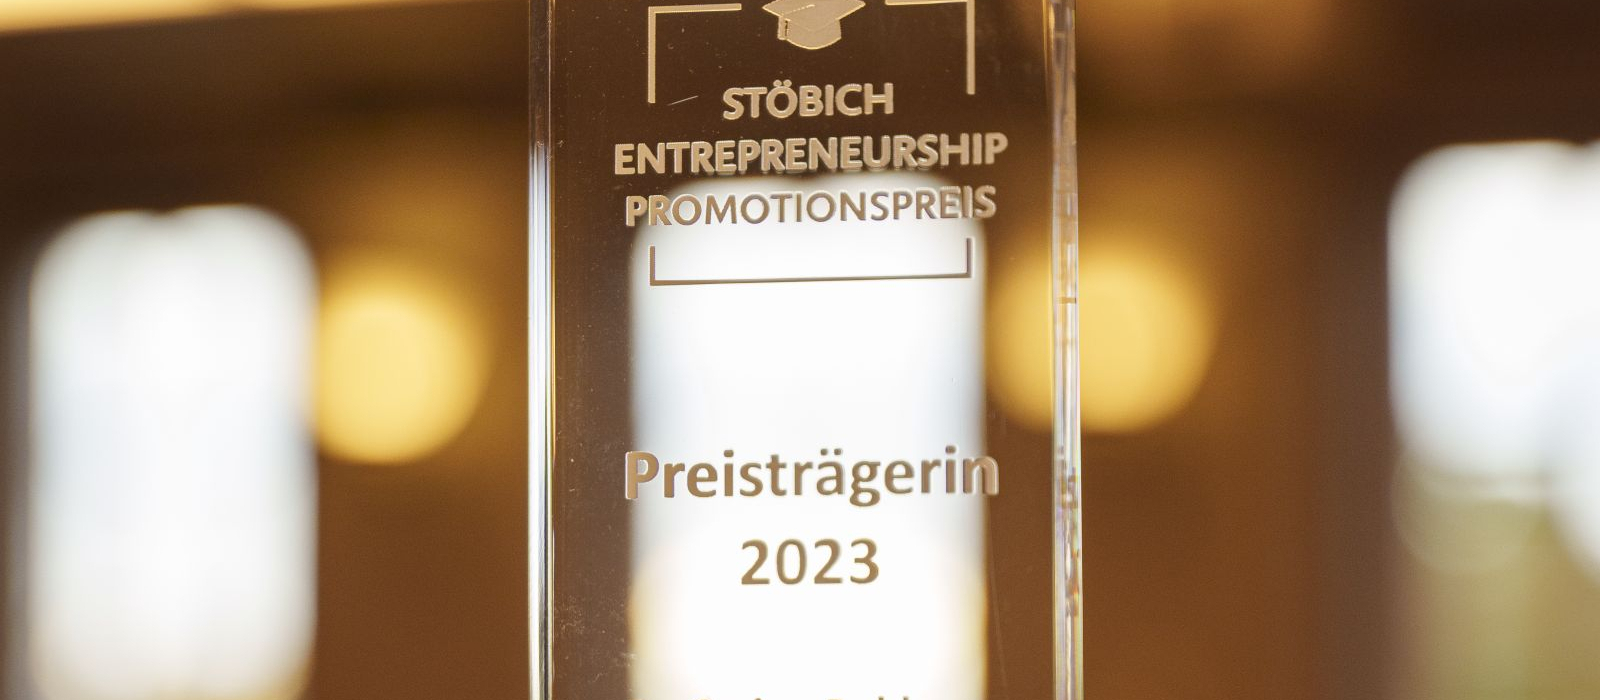 Stöbich Entrepreneurship